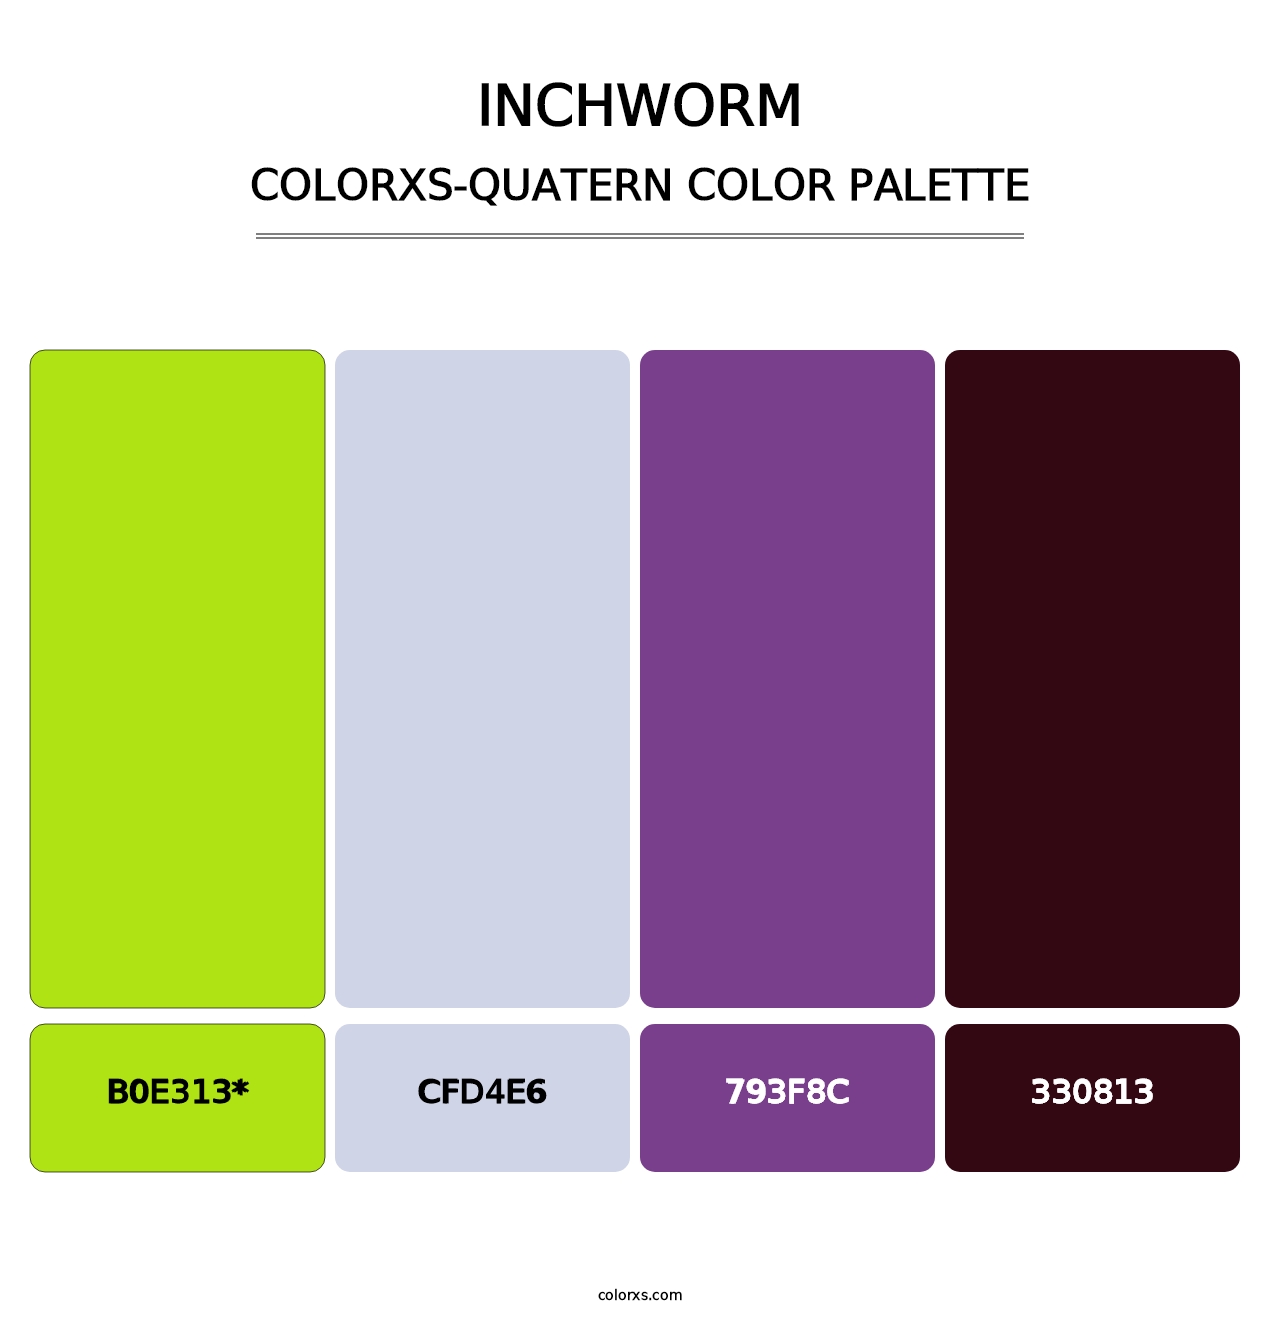 Inchworm - Colorxs Quatern Palette